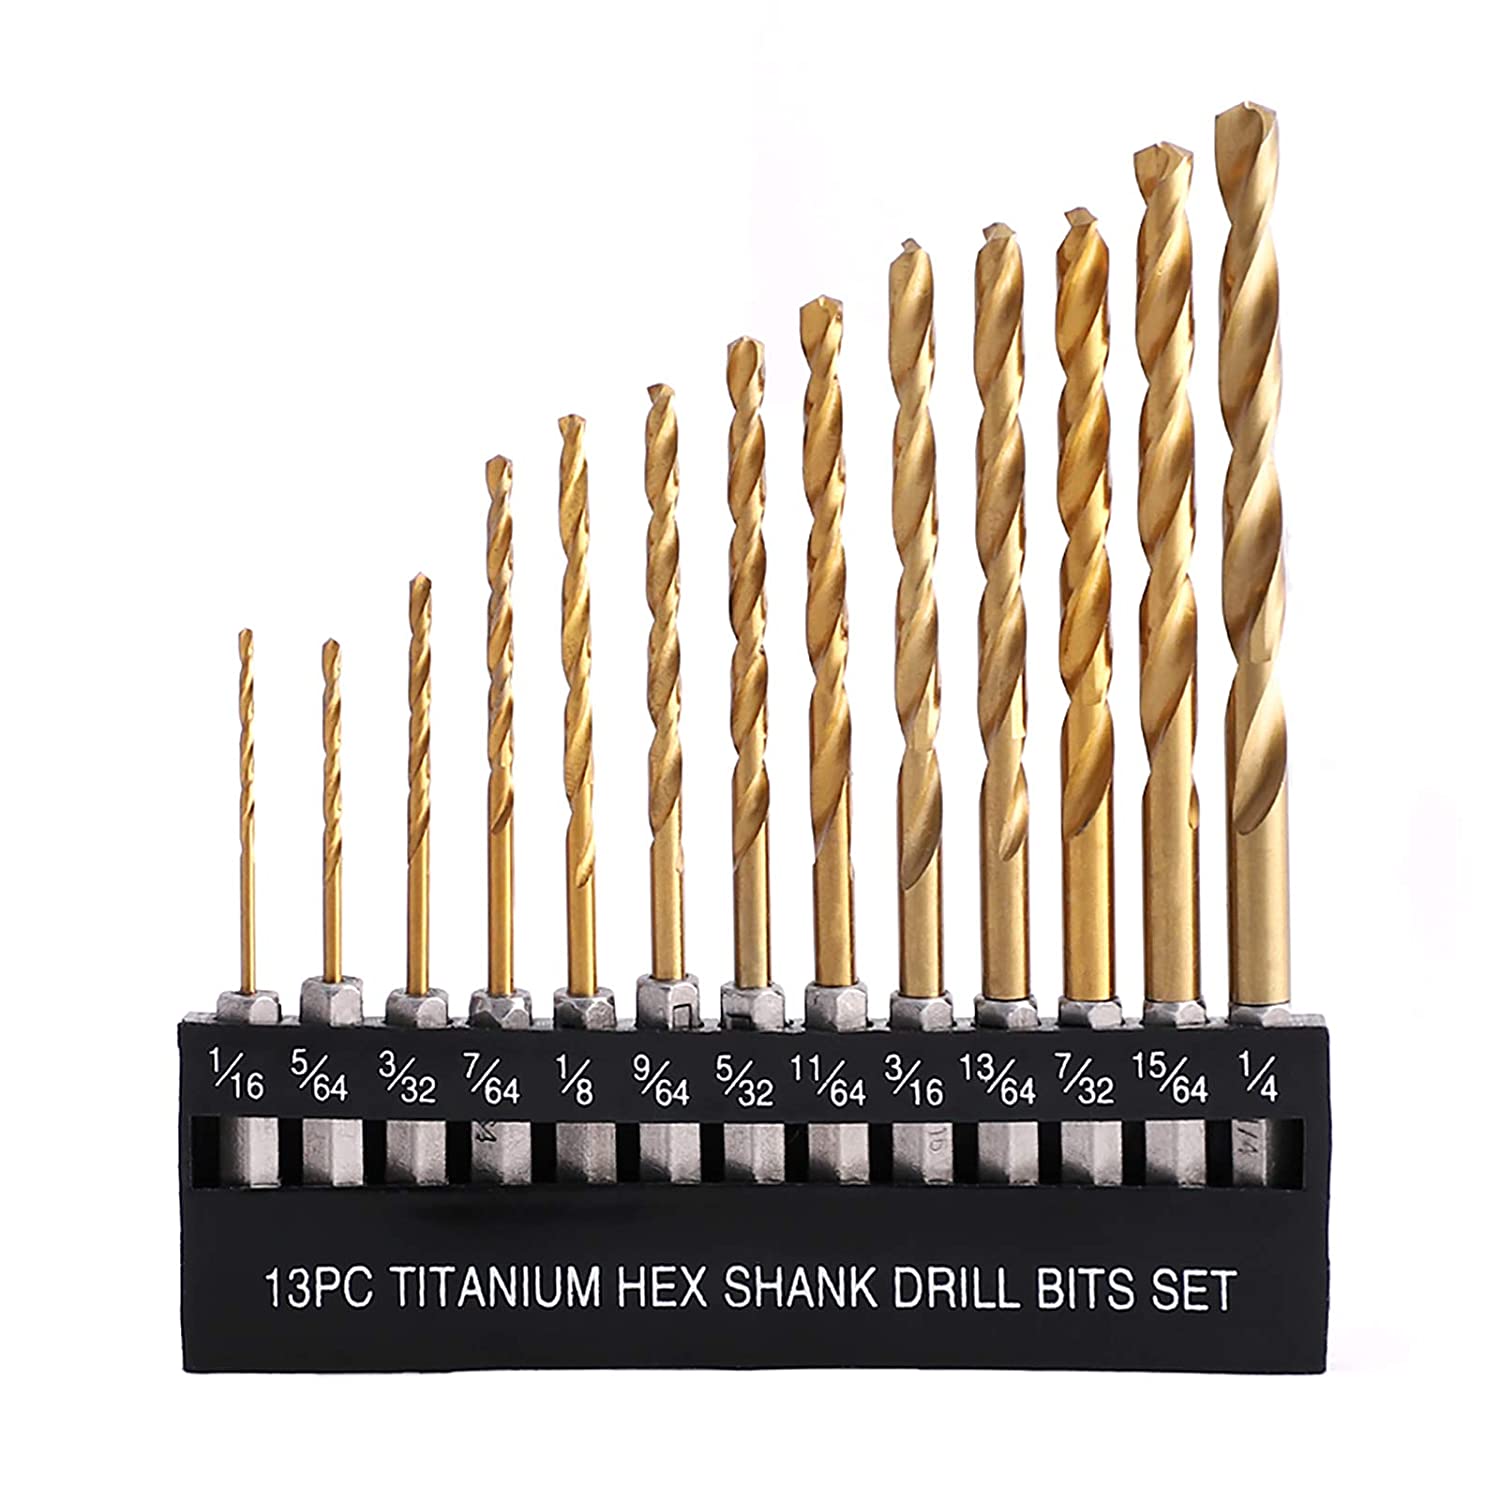 COMOWARE Titanium Twist Drill Bit Set - 13 Pcs Hex Shank High Speed Steel for Wood Plastic Aluminum Alloy, Quick Change, 1/16"-1/4" $8.49